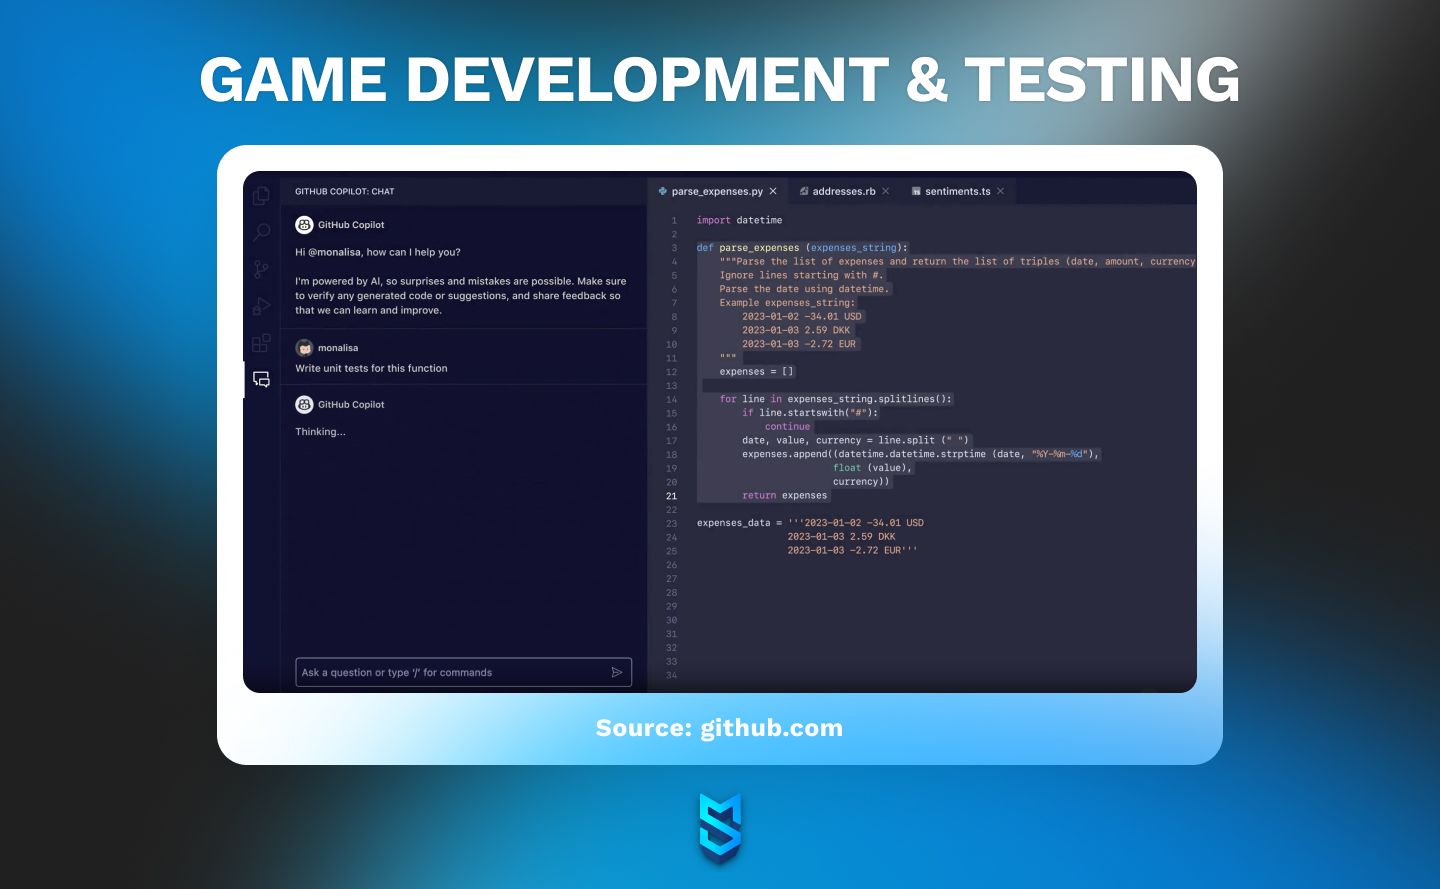 Game development & testing